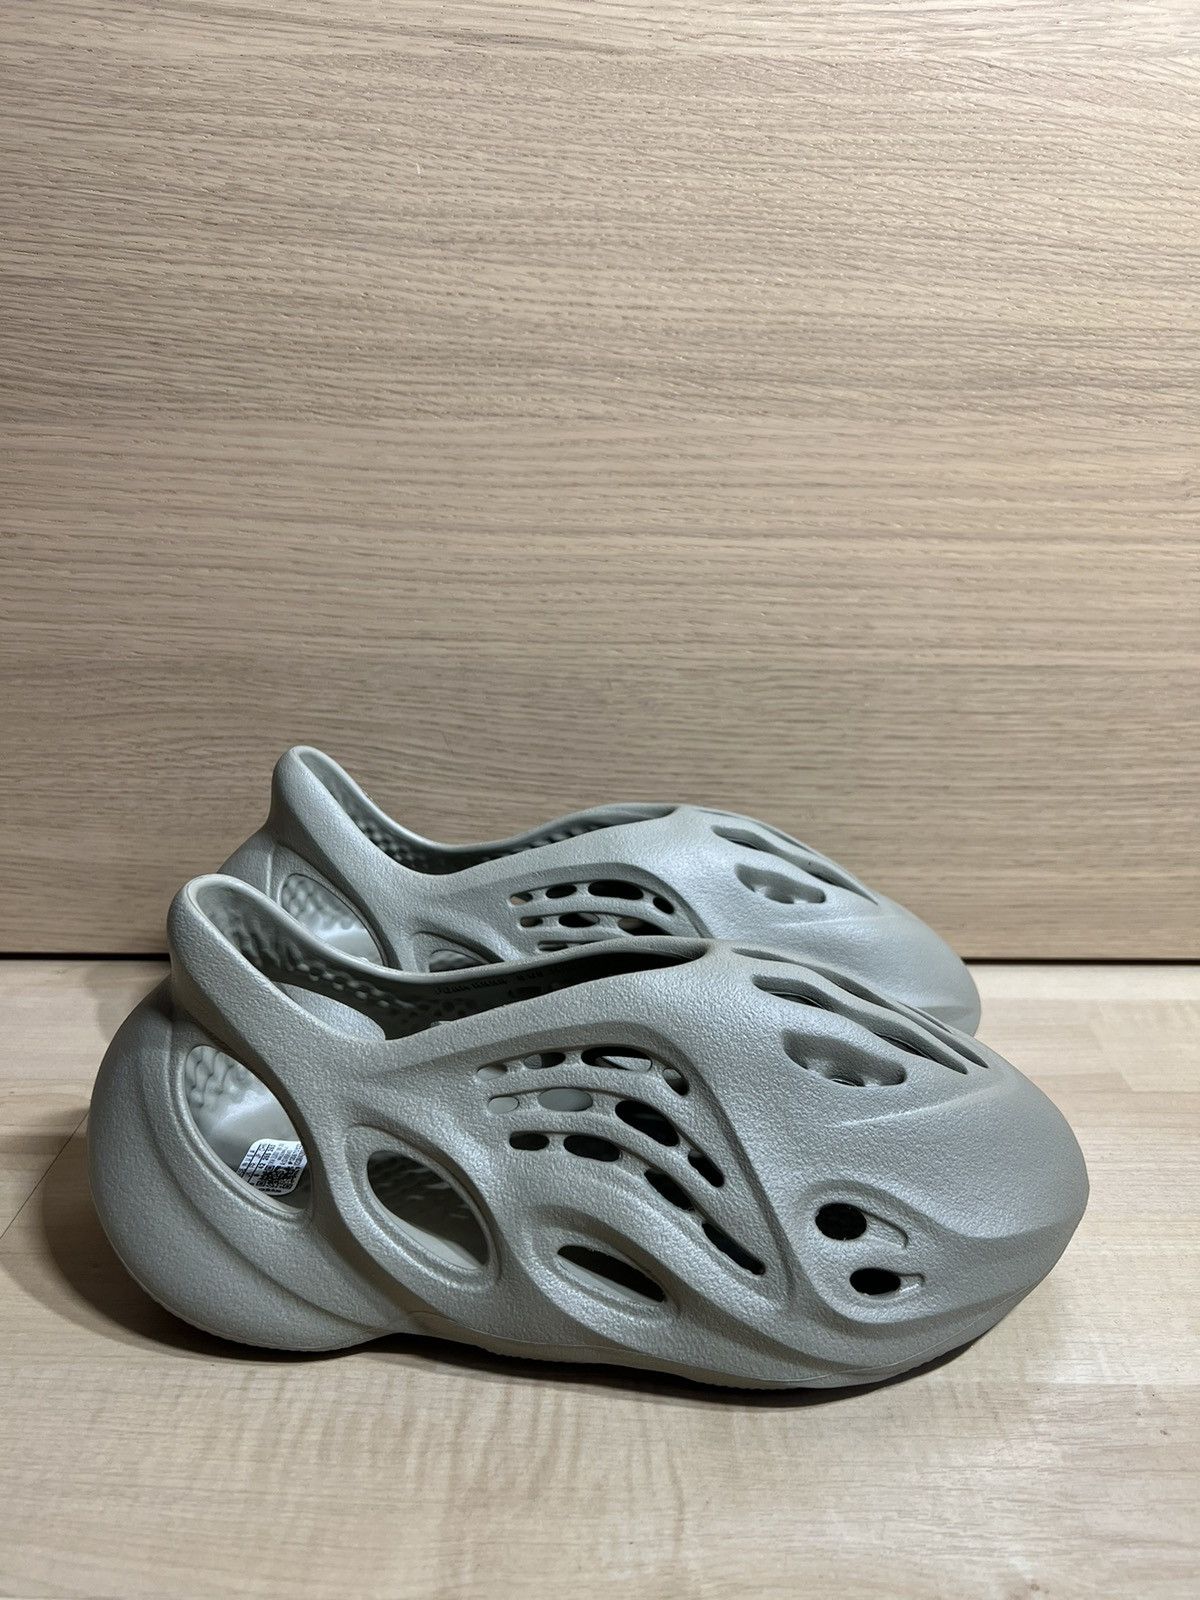 Adidas Yeezy Foamrunner “Stone Salt” | Grailed